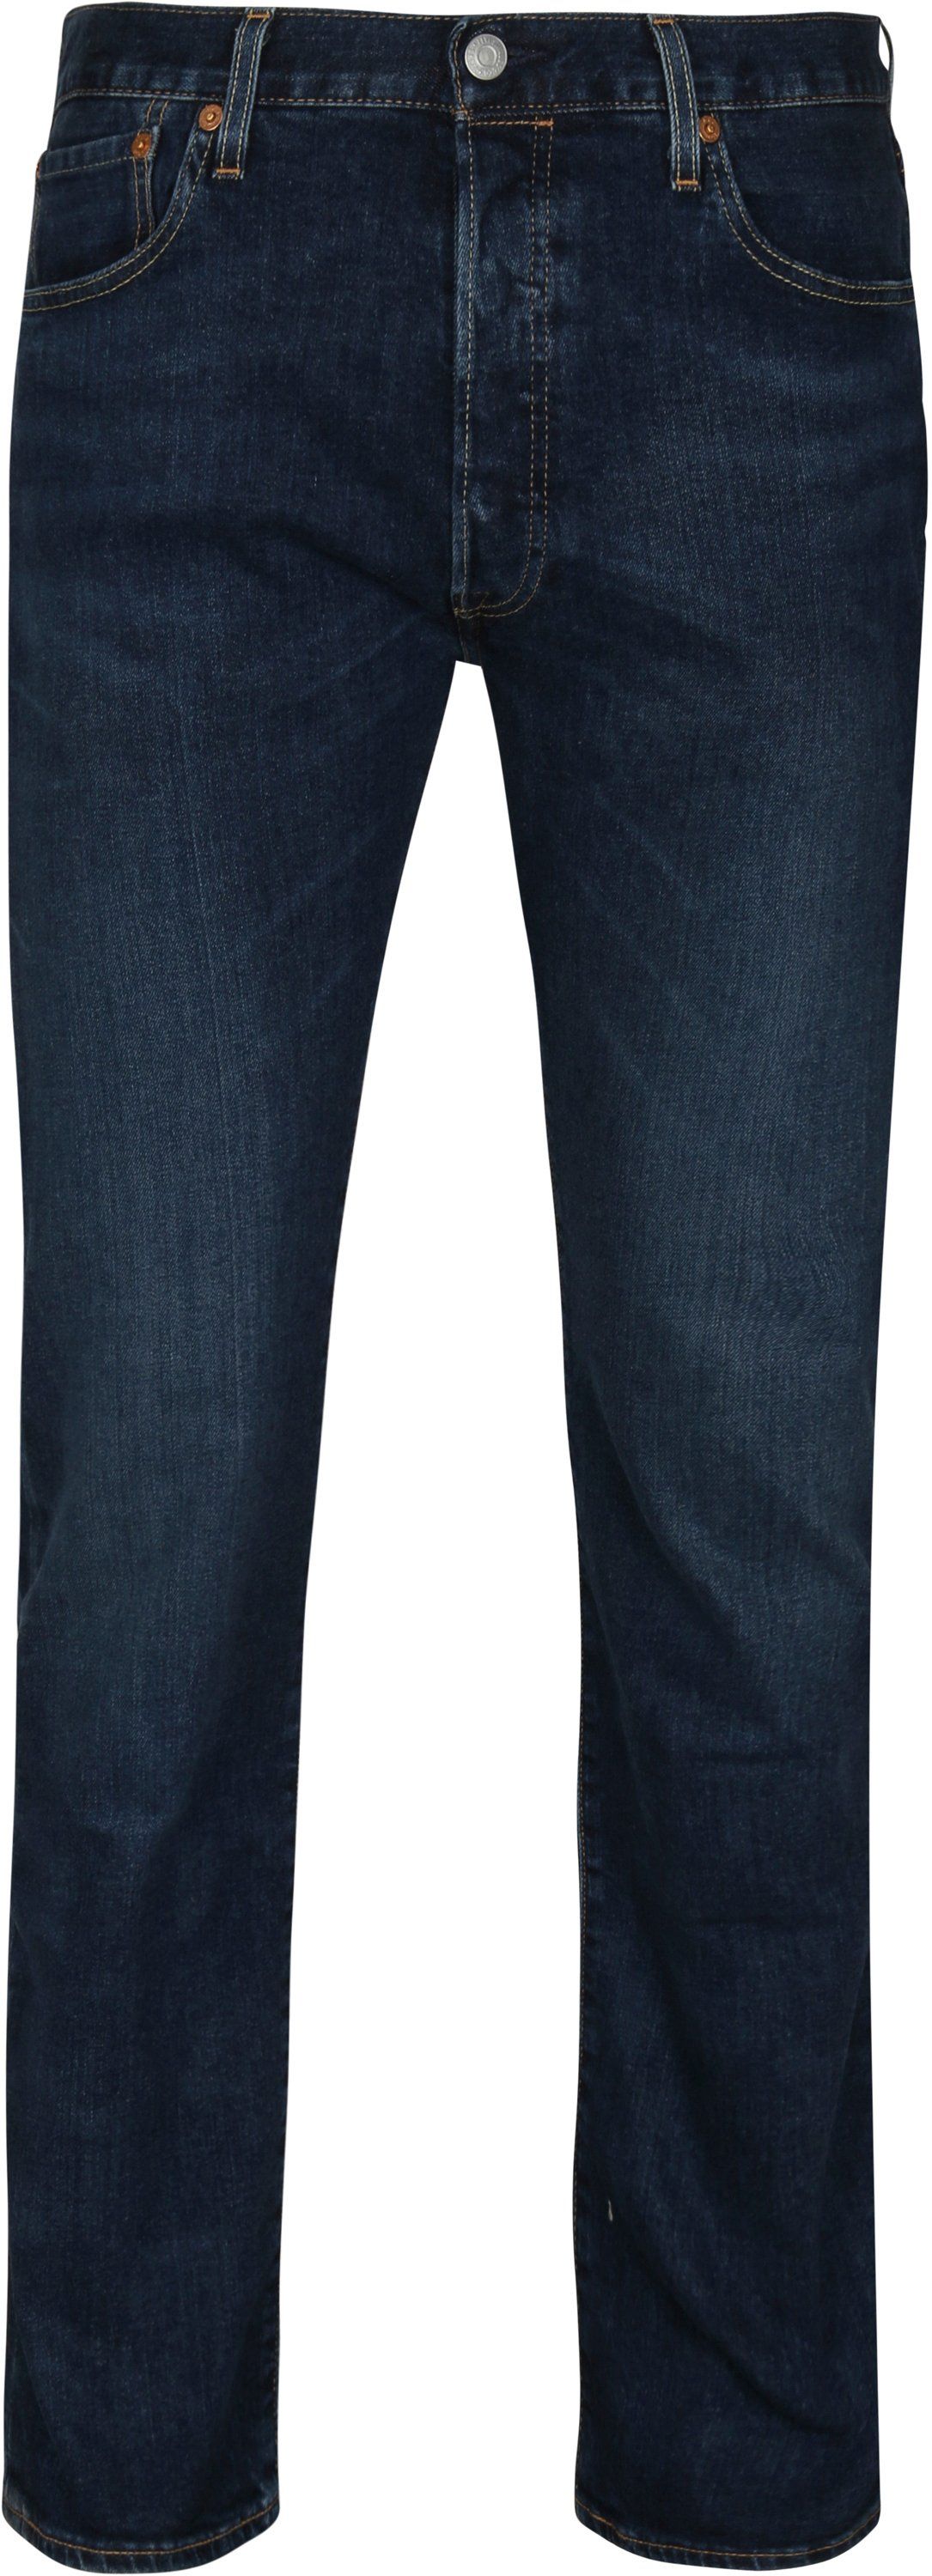 Levis - Levi's jeans 501 original fit dark blue dark blue size w 31